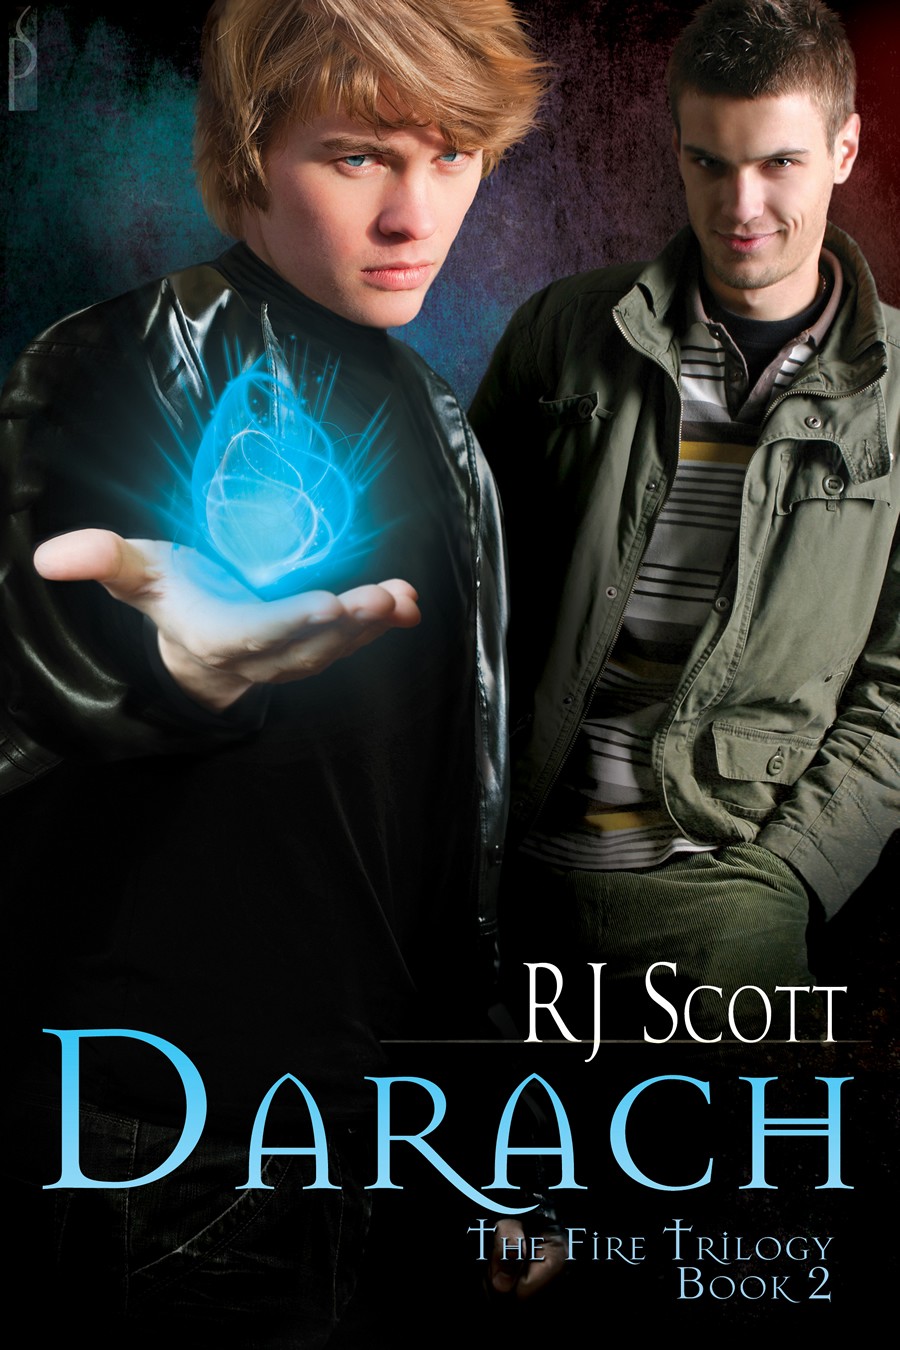 Darach (2011) by R.J. Scott